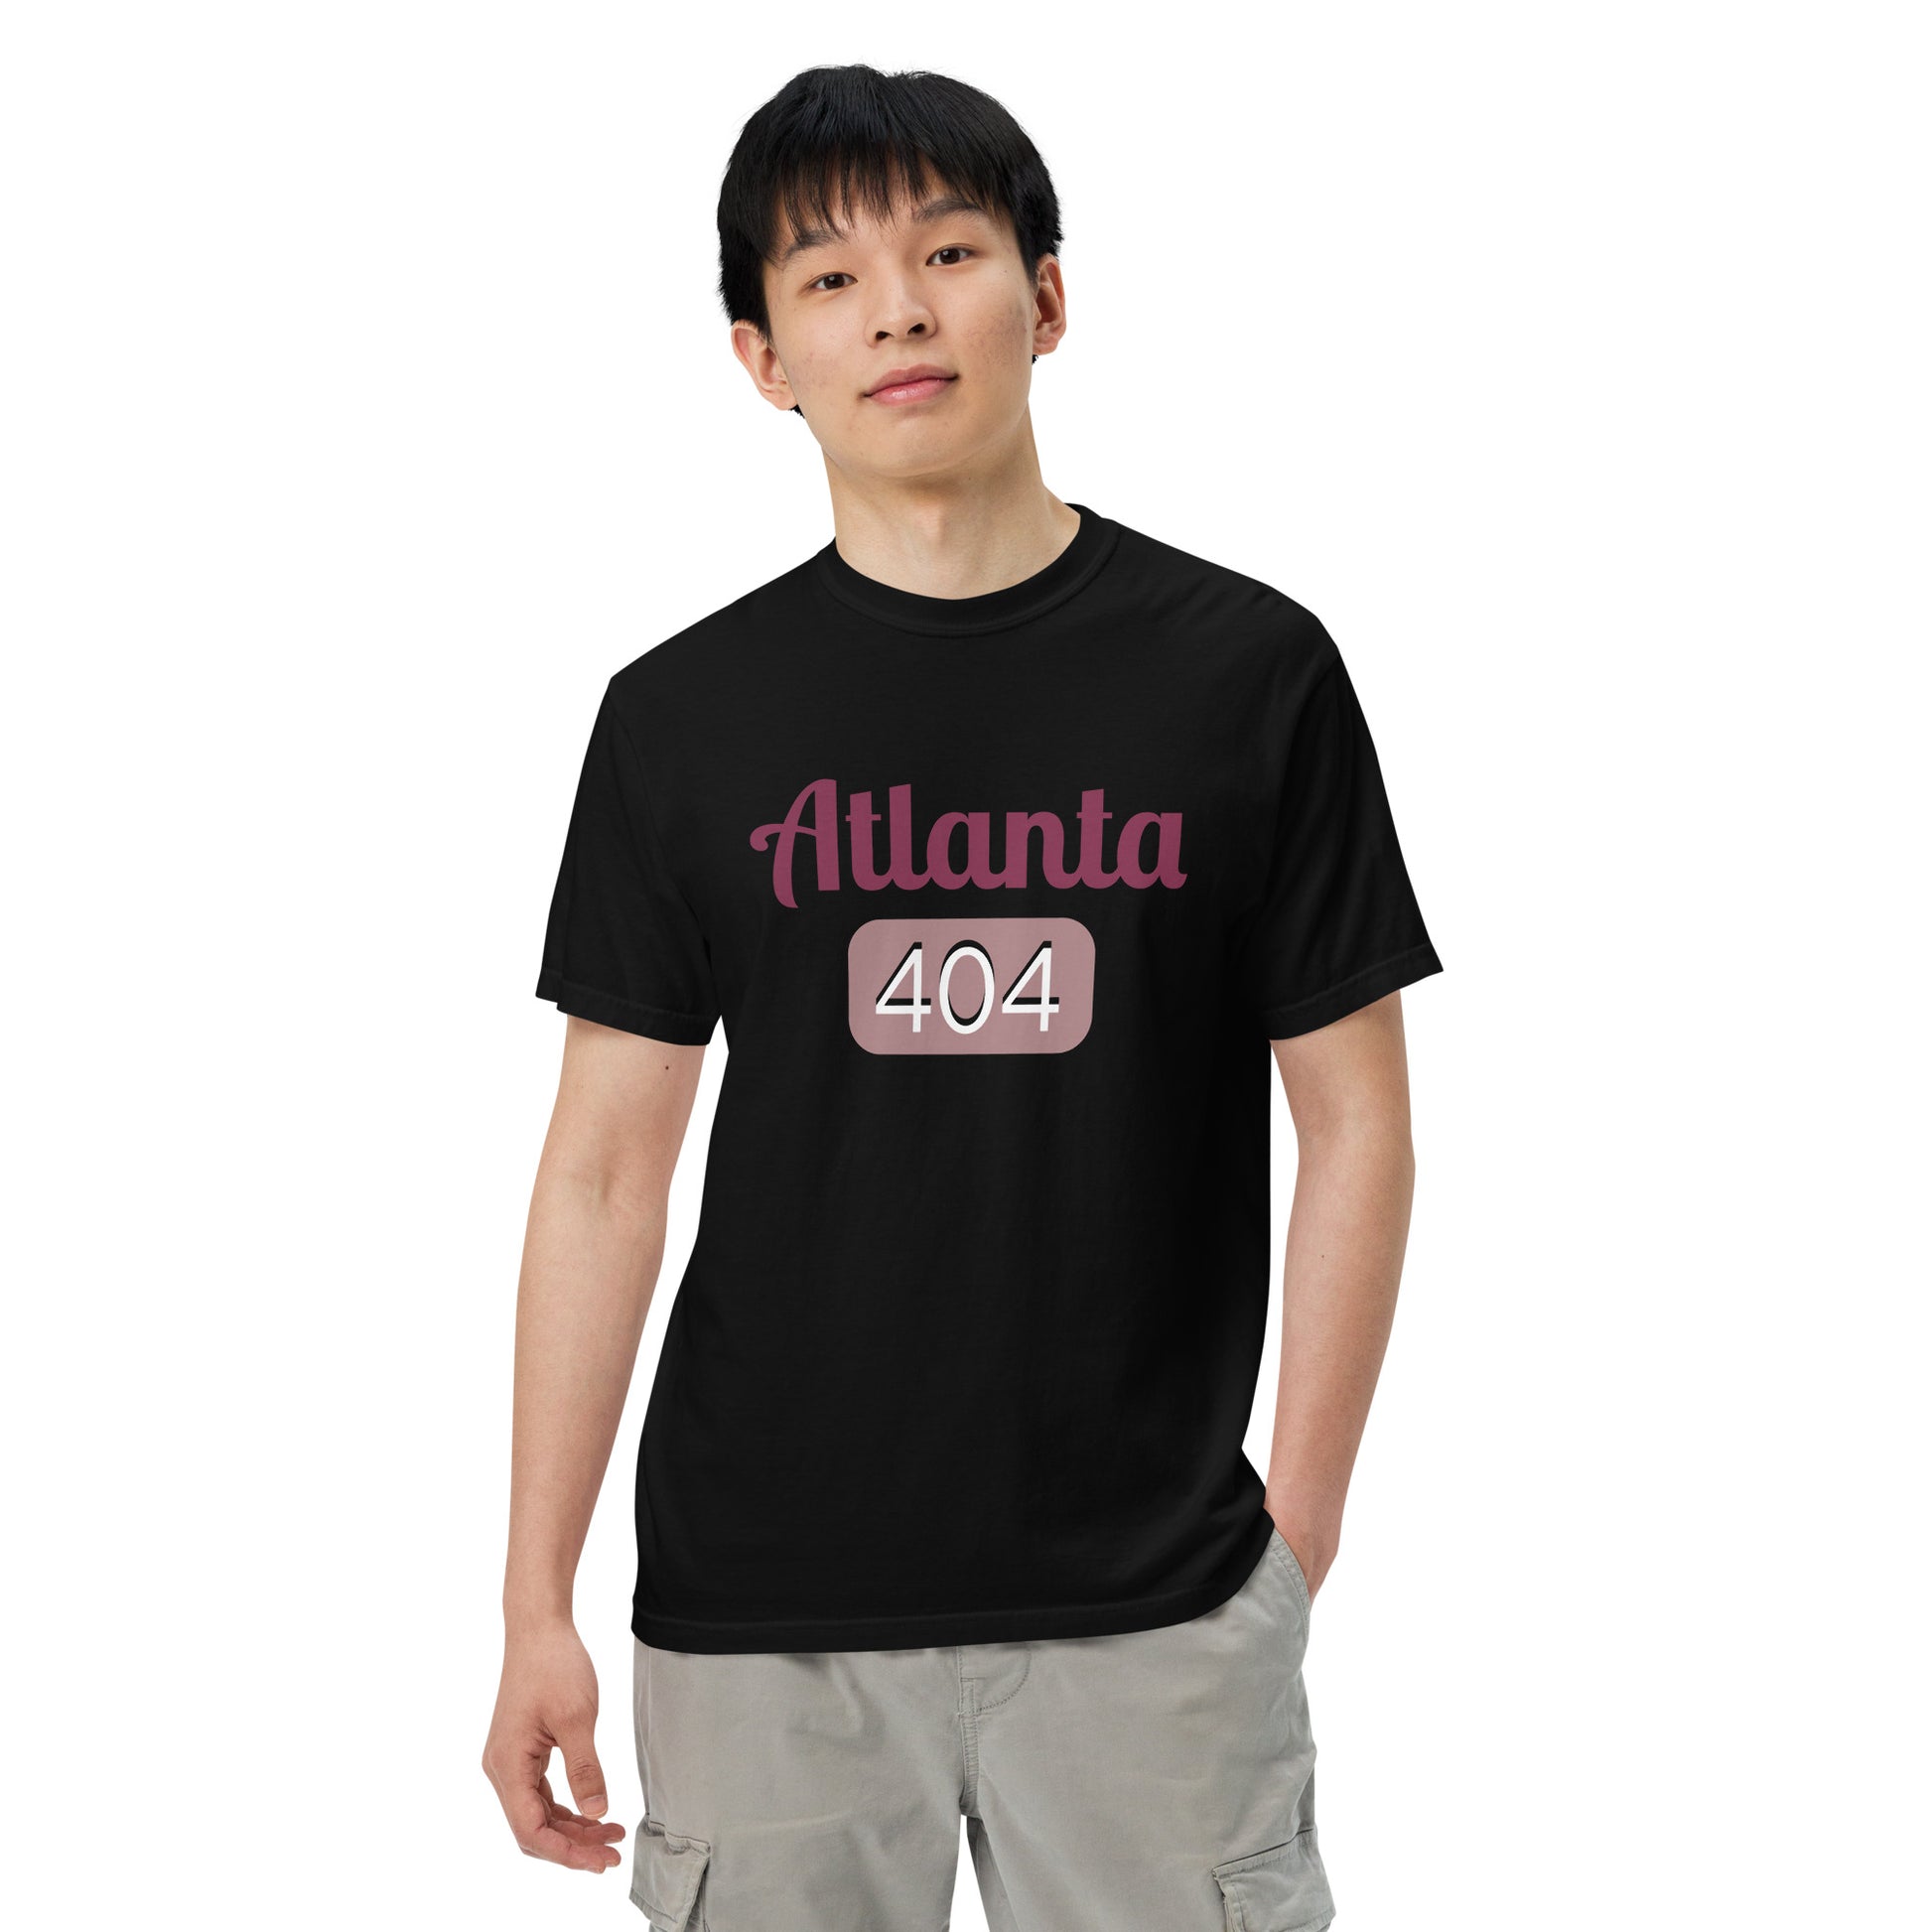 Atlanta 404 t-shirt in black